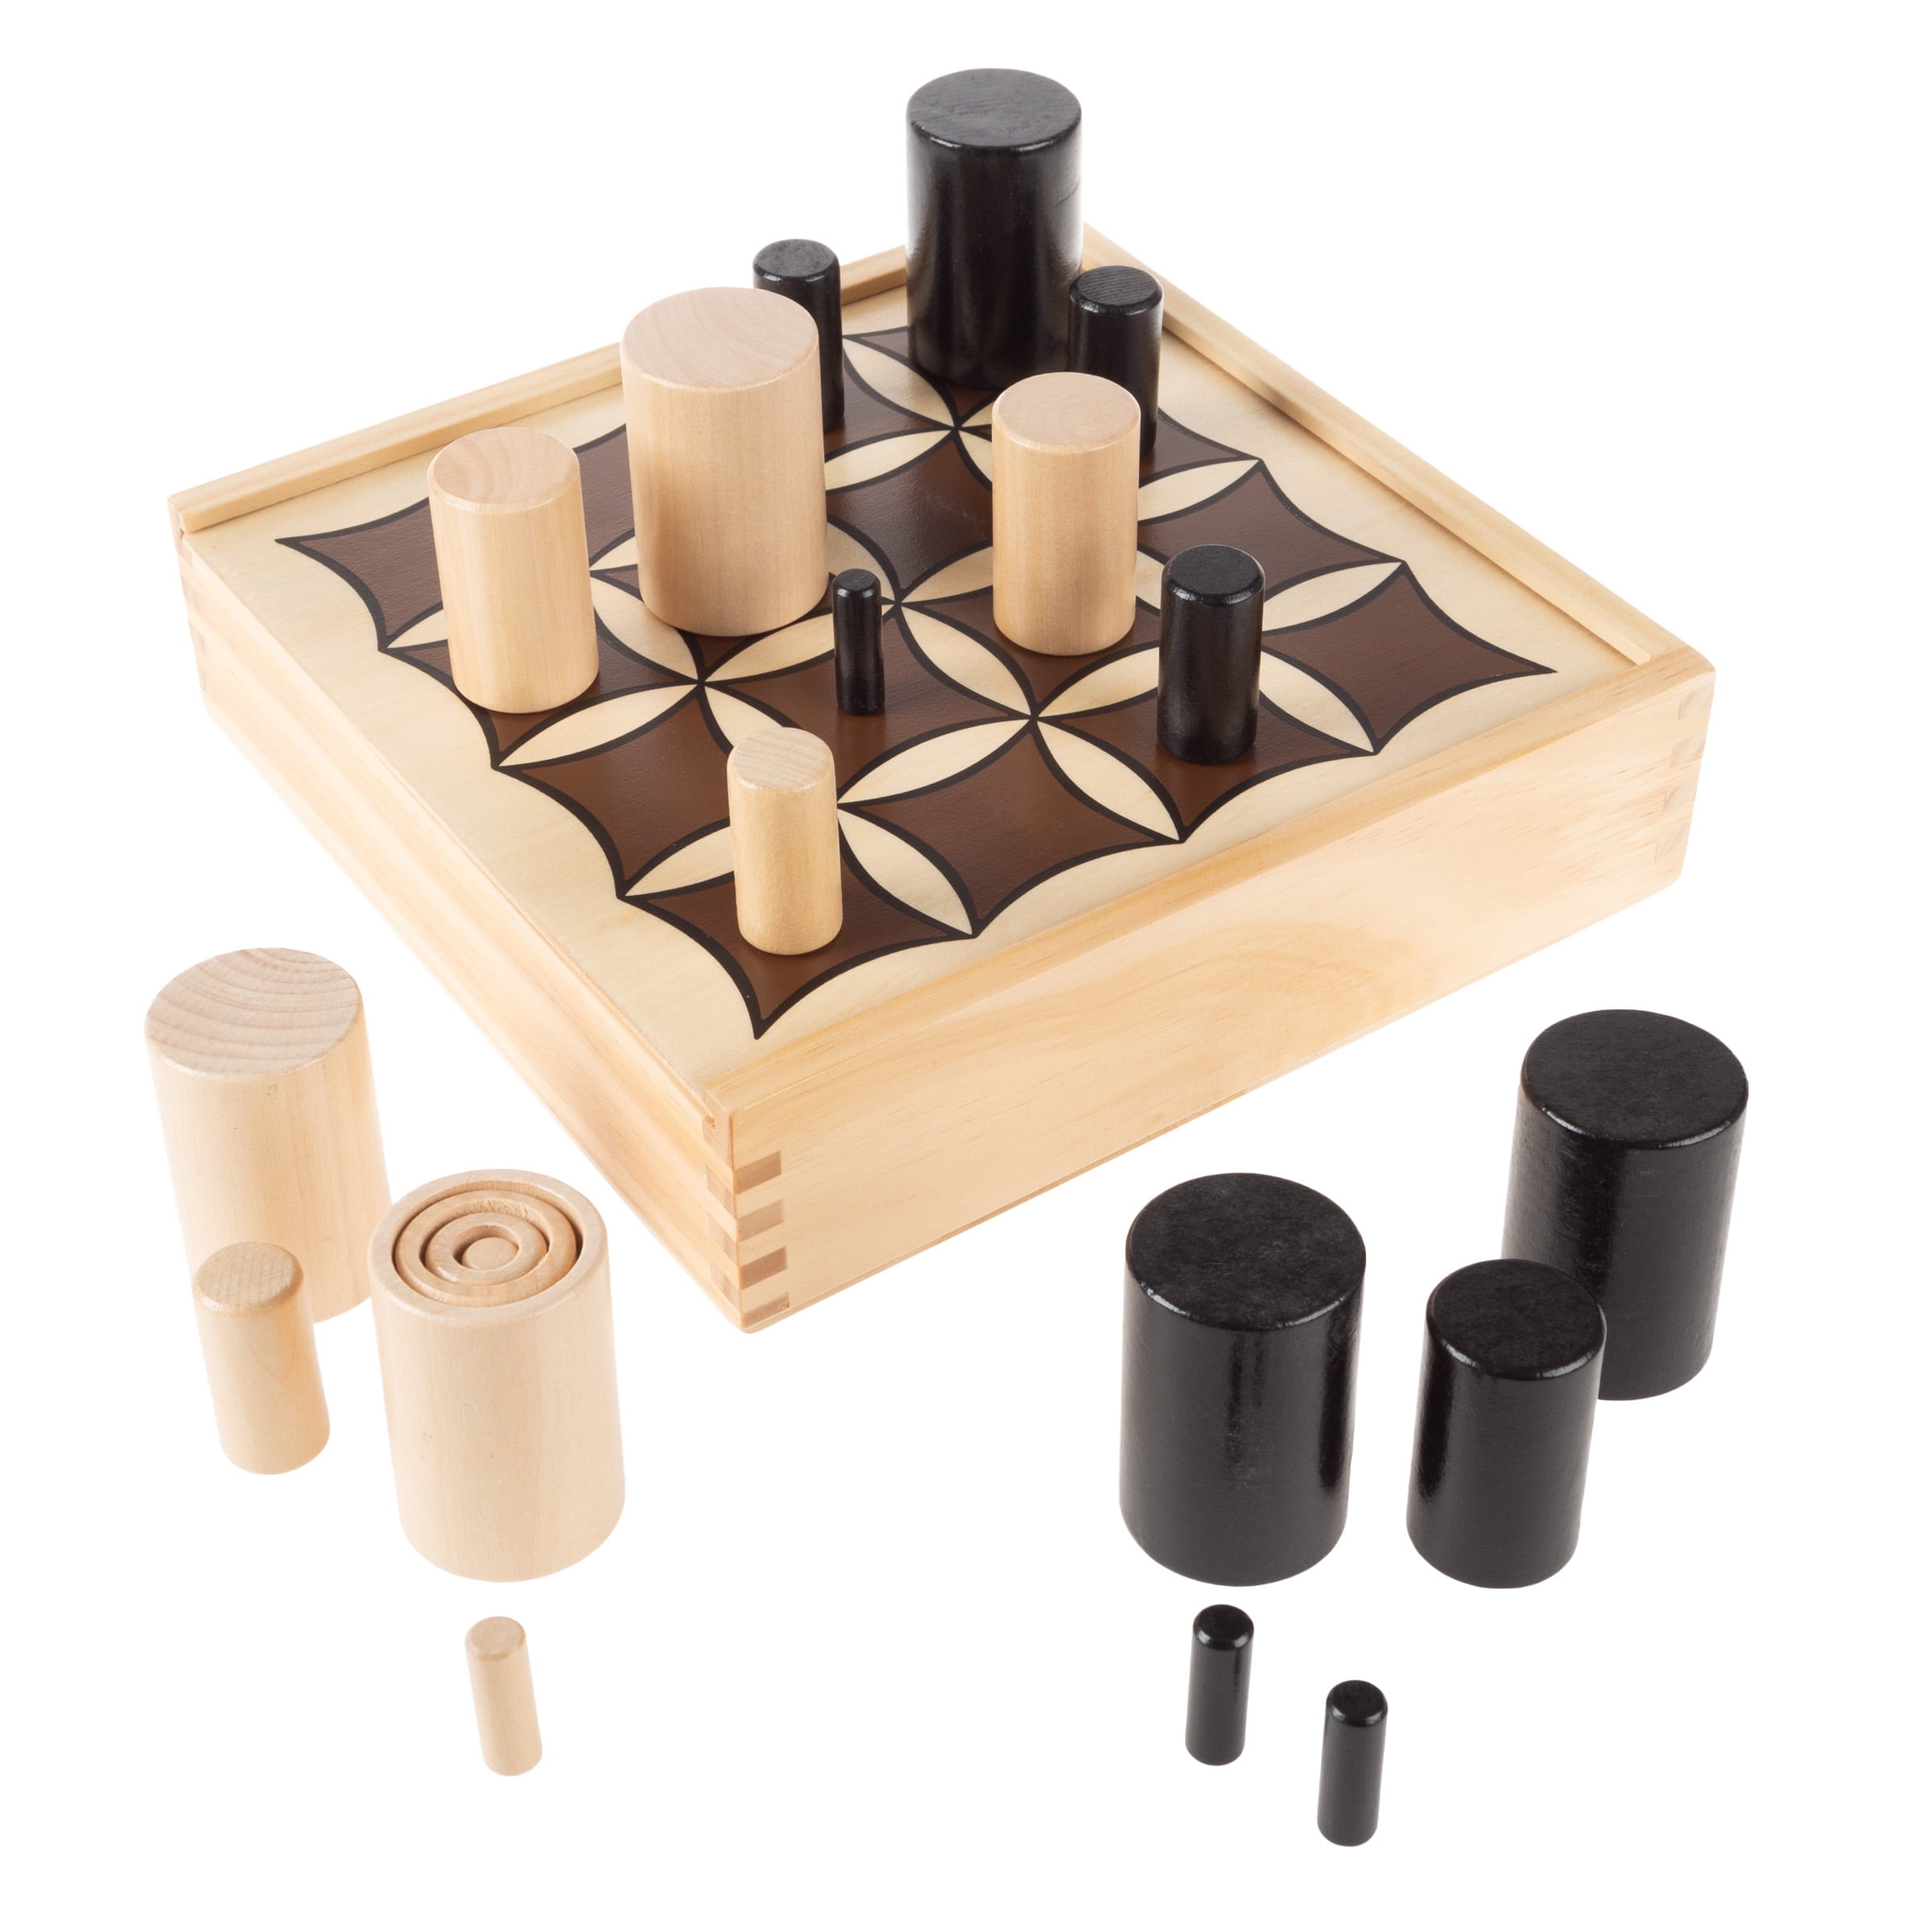 Extreme Tic Tac Toe game wood wooden 3x3 4x4 5x5 26 pieces Tik Tak